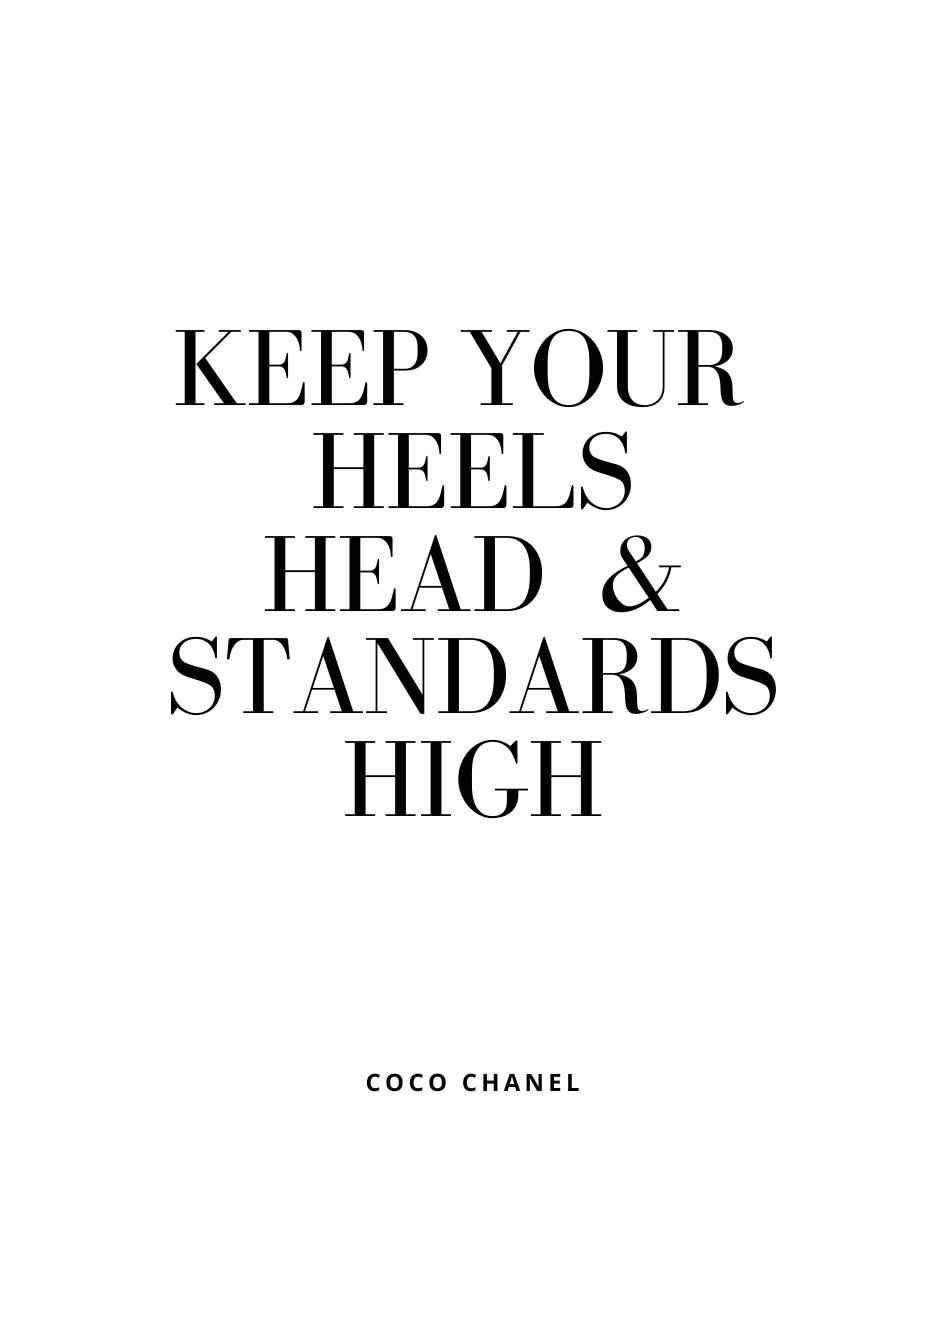 Coco Chanel zitat Poster